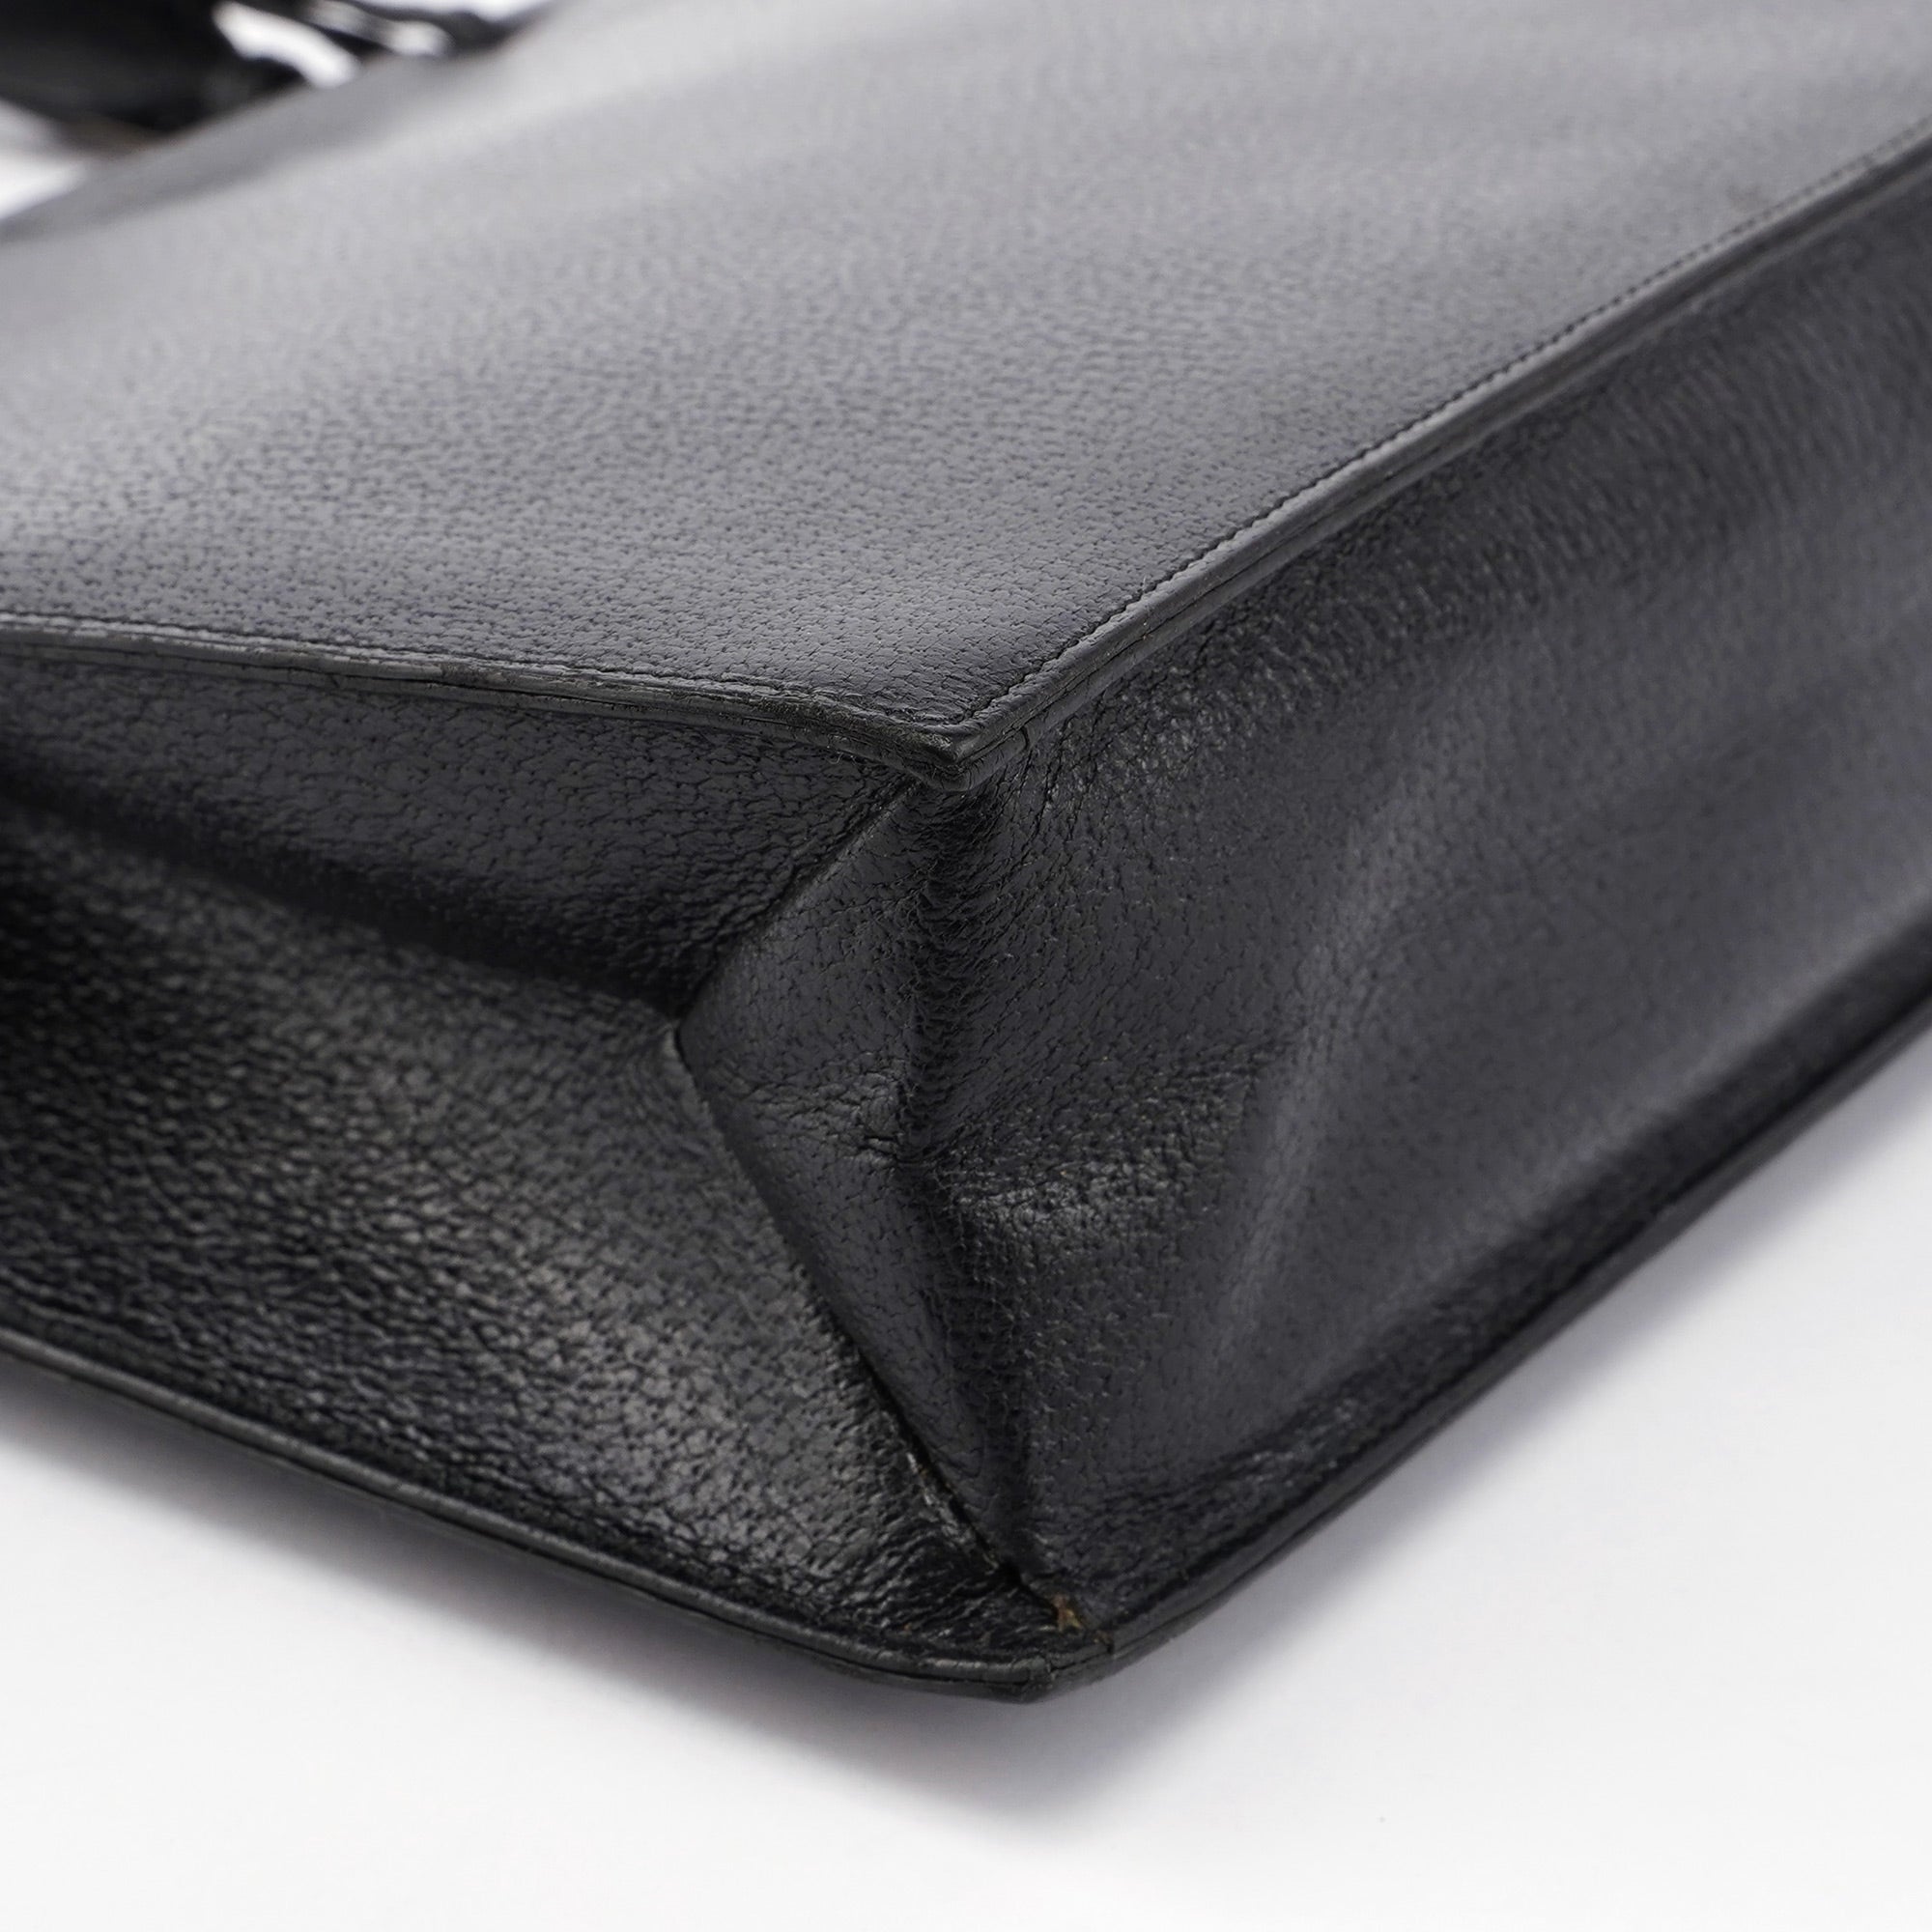 Gucci Black Leather Top Handle Bag